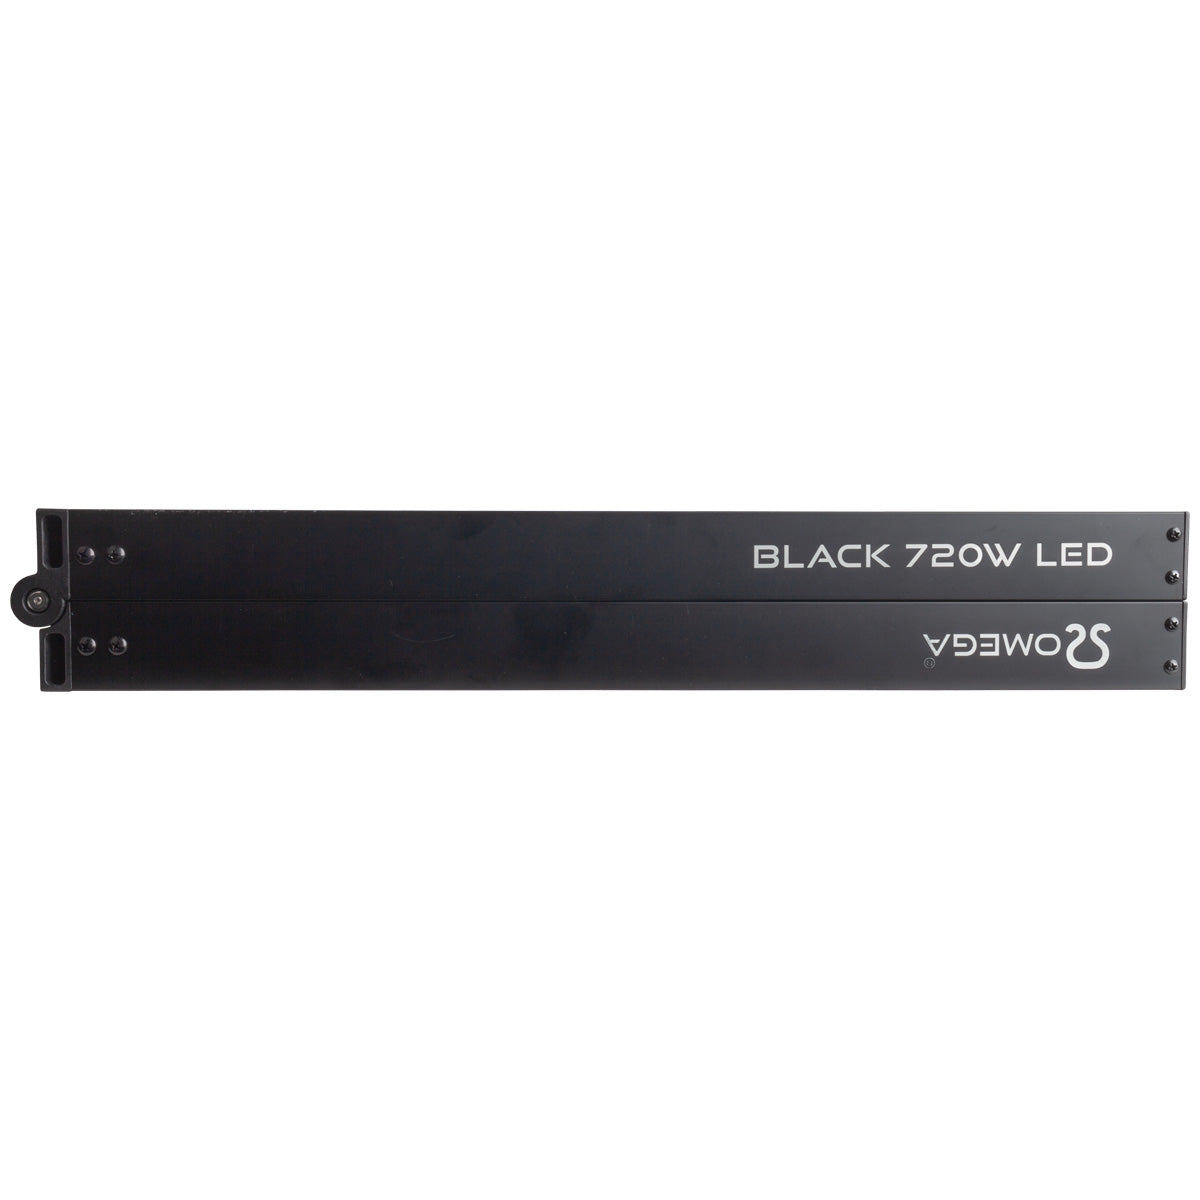 Omega Black LED Grow Light – 720W